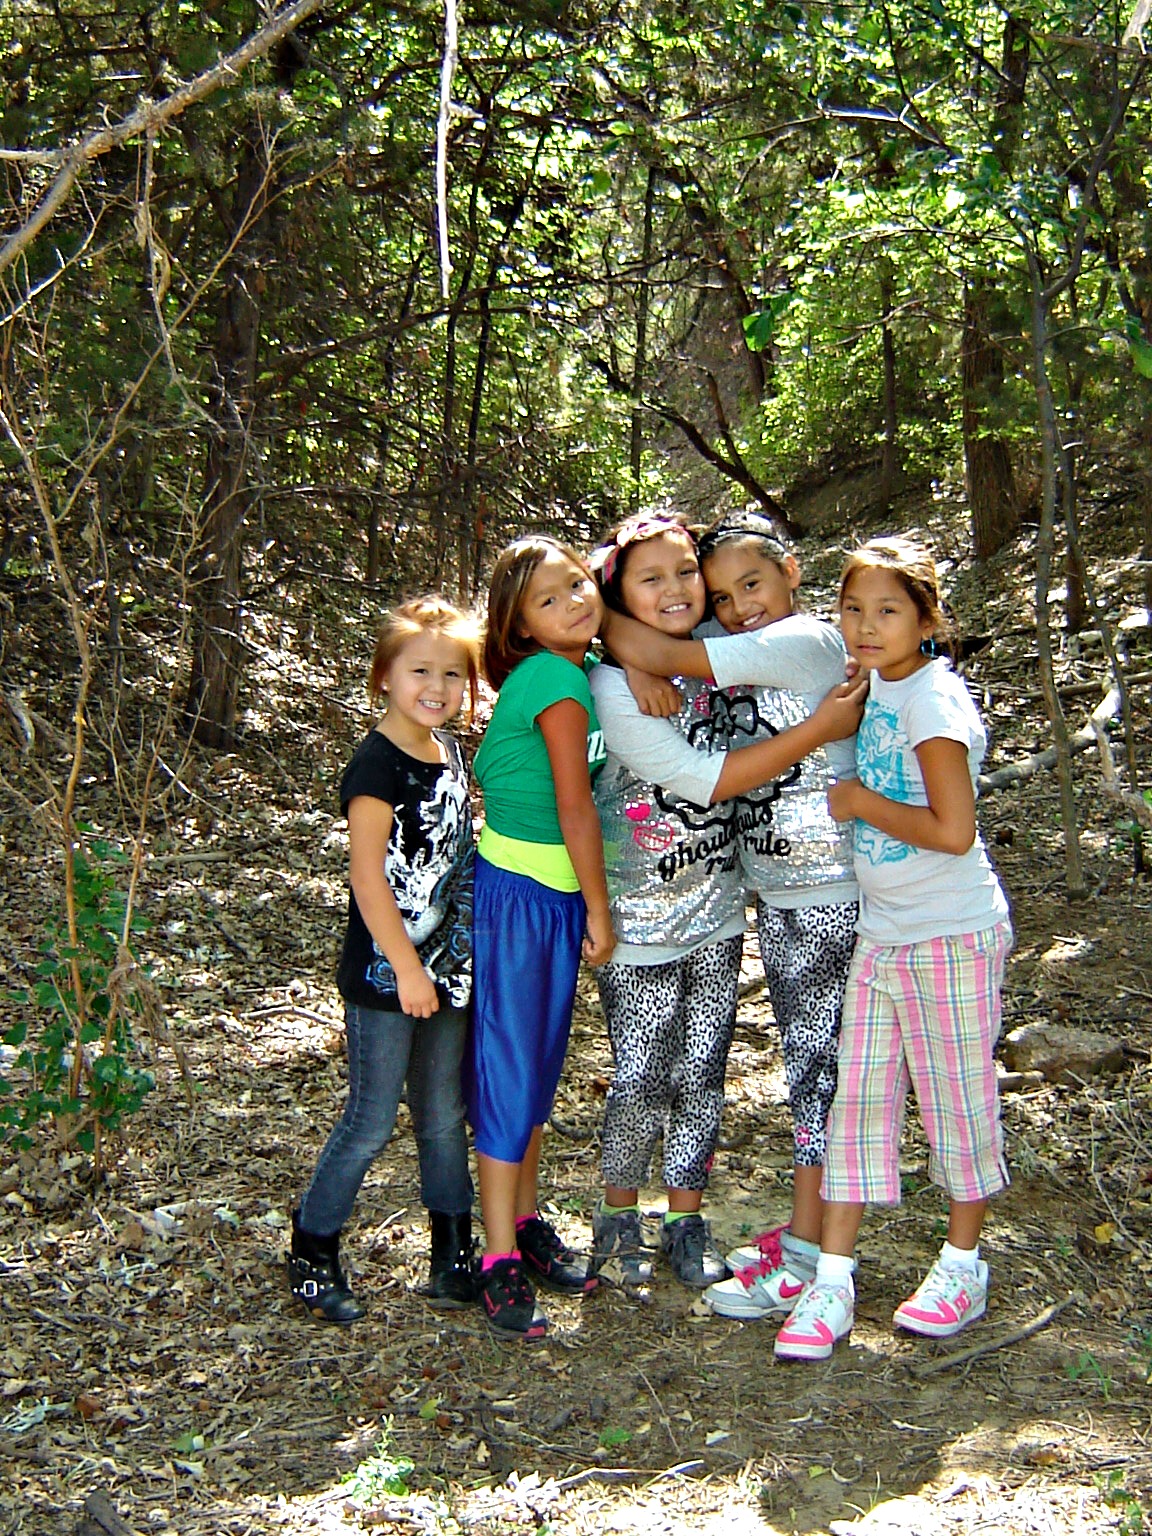 Native American girls hiking through the woods.